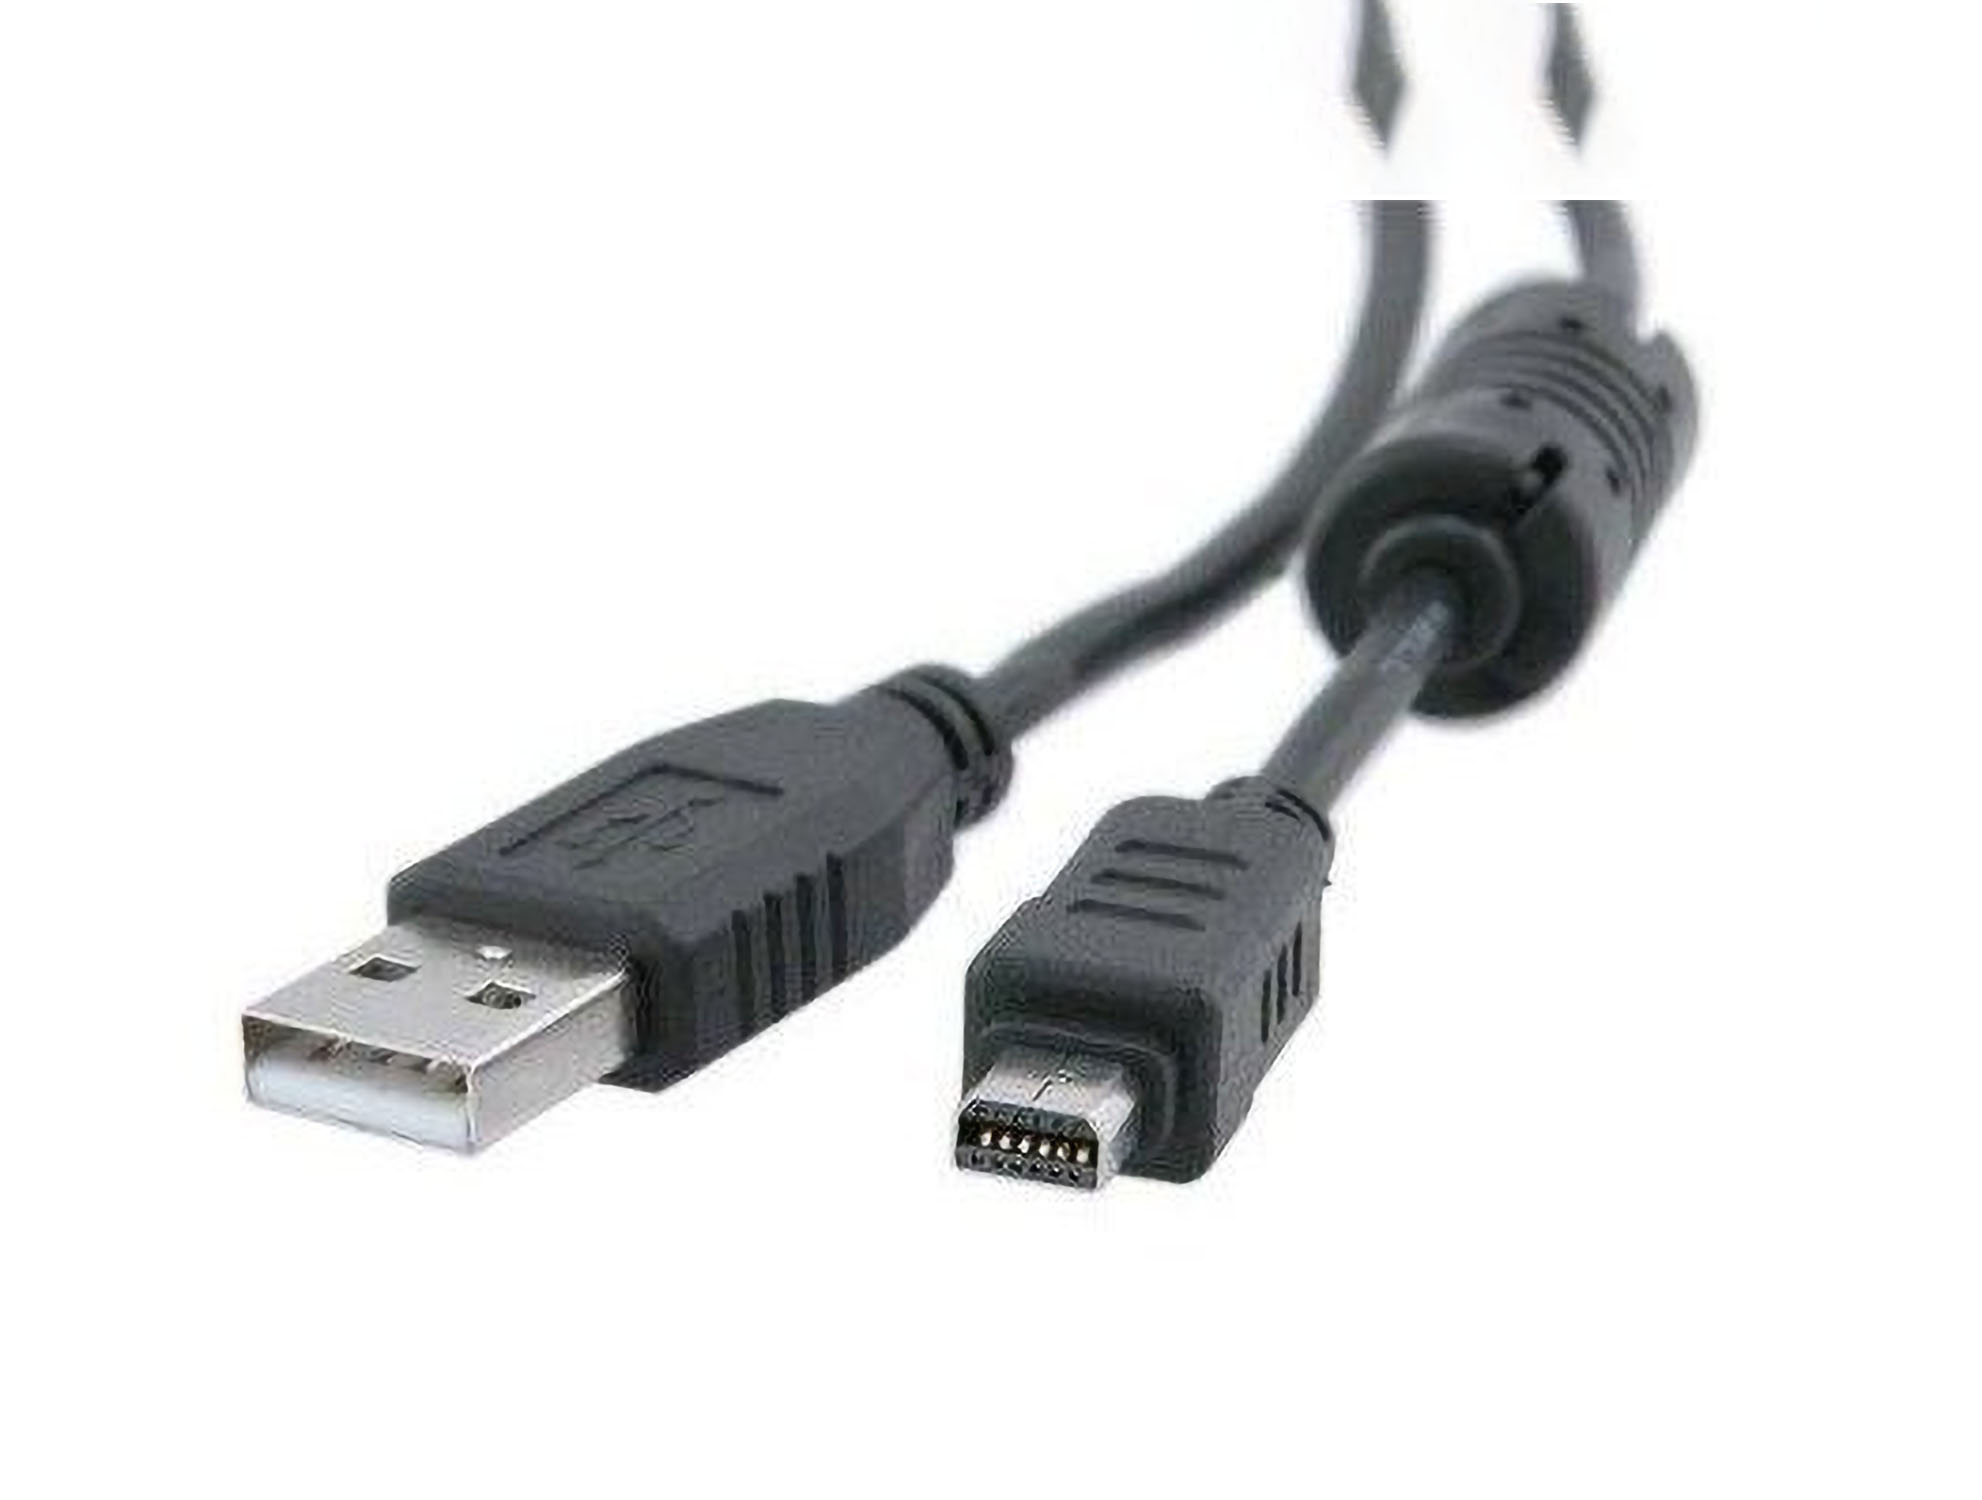 MOBILOTEC USB-Datenkabel kompatibel mit Olympus Olympus, Zubehör schwarz U1010